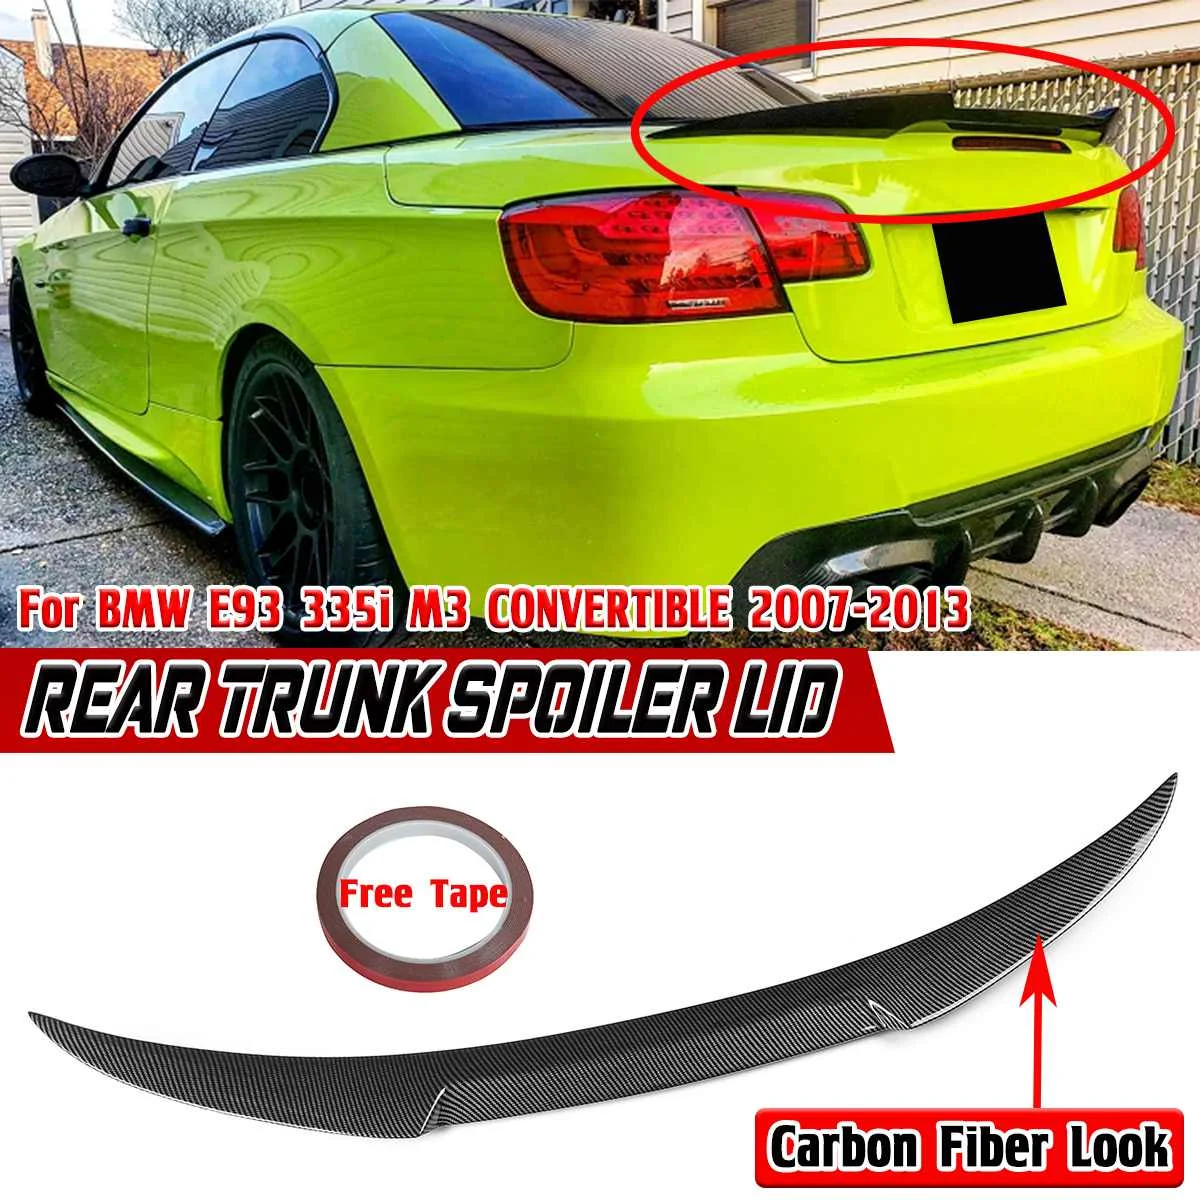 

Glossy Black/Carbon Fiber Look Car Rear Trunk Spoiler Lip M4 Style Rear Wing Spoiler For BMW E93 335i M3 CONVERTIBLE 2007-2013